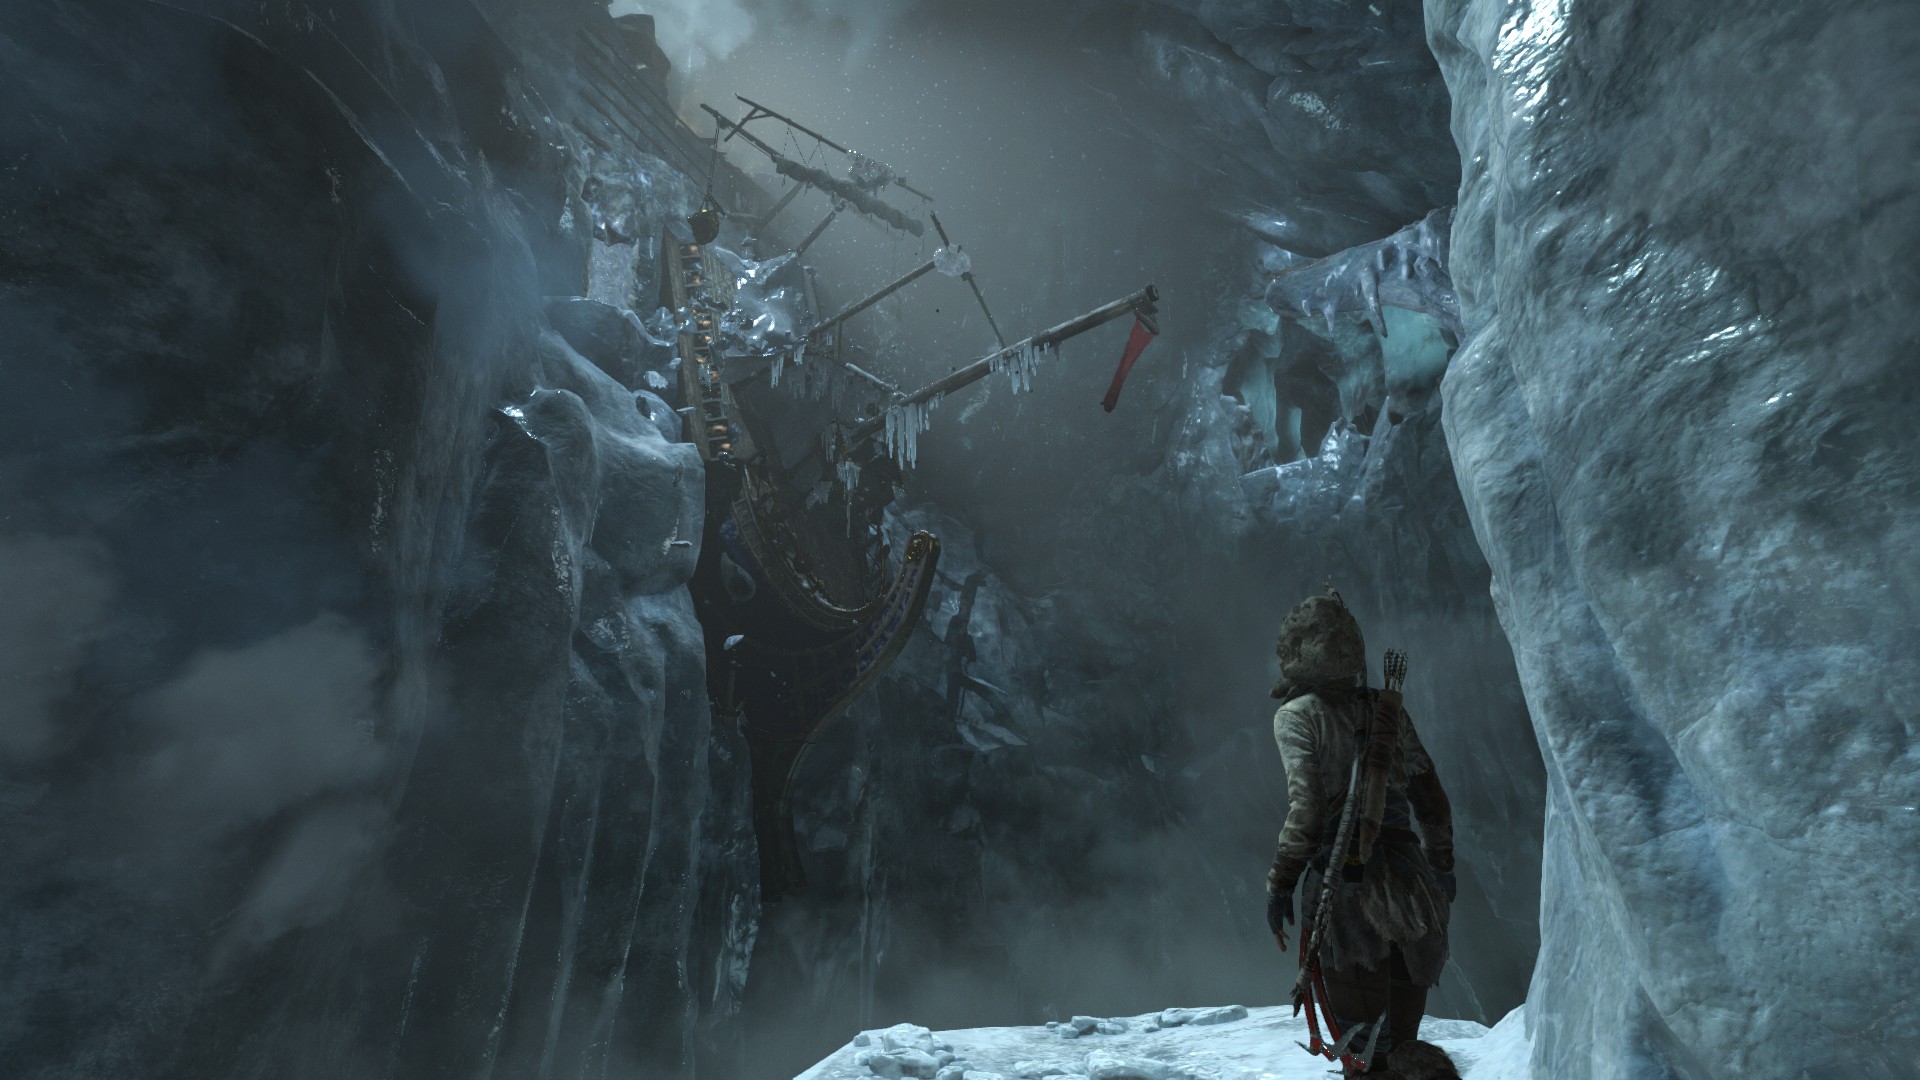 General 1920x1080 Rise of the Tomb Raider screen shot video games Lara Croft (Tomb Raider) ice cold rocks shipwreck PC gaming